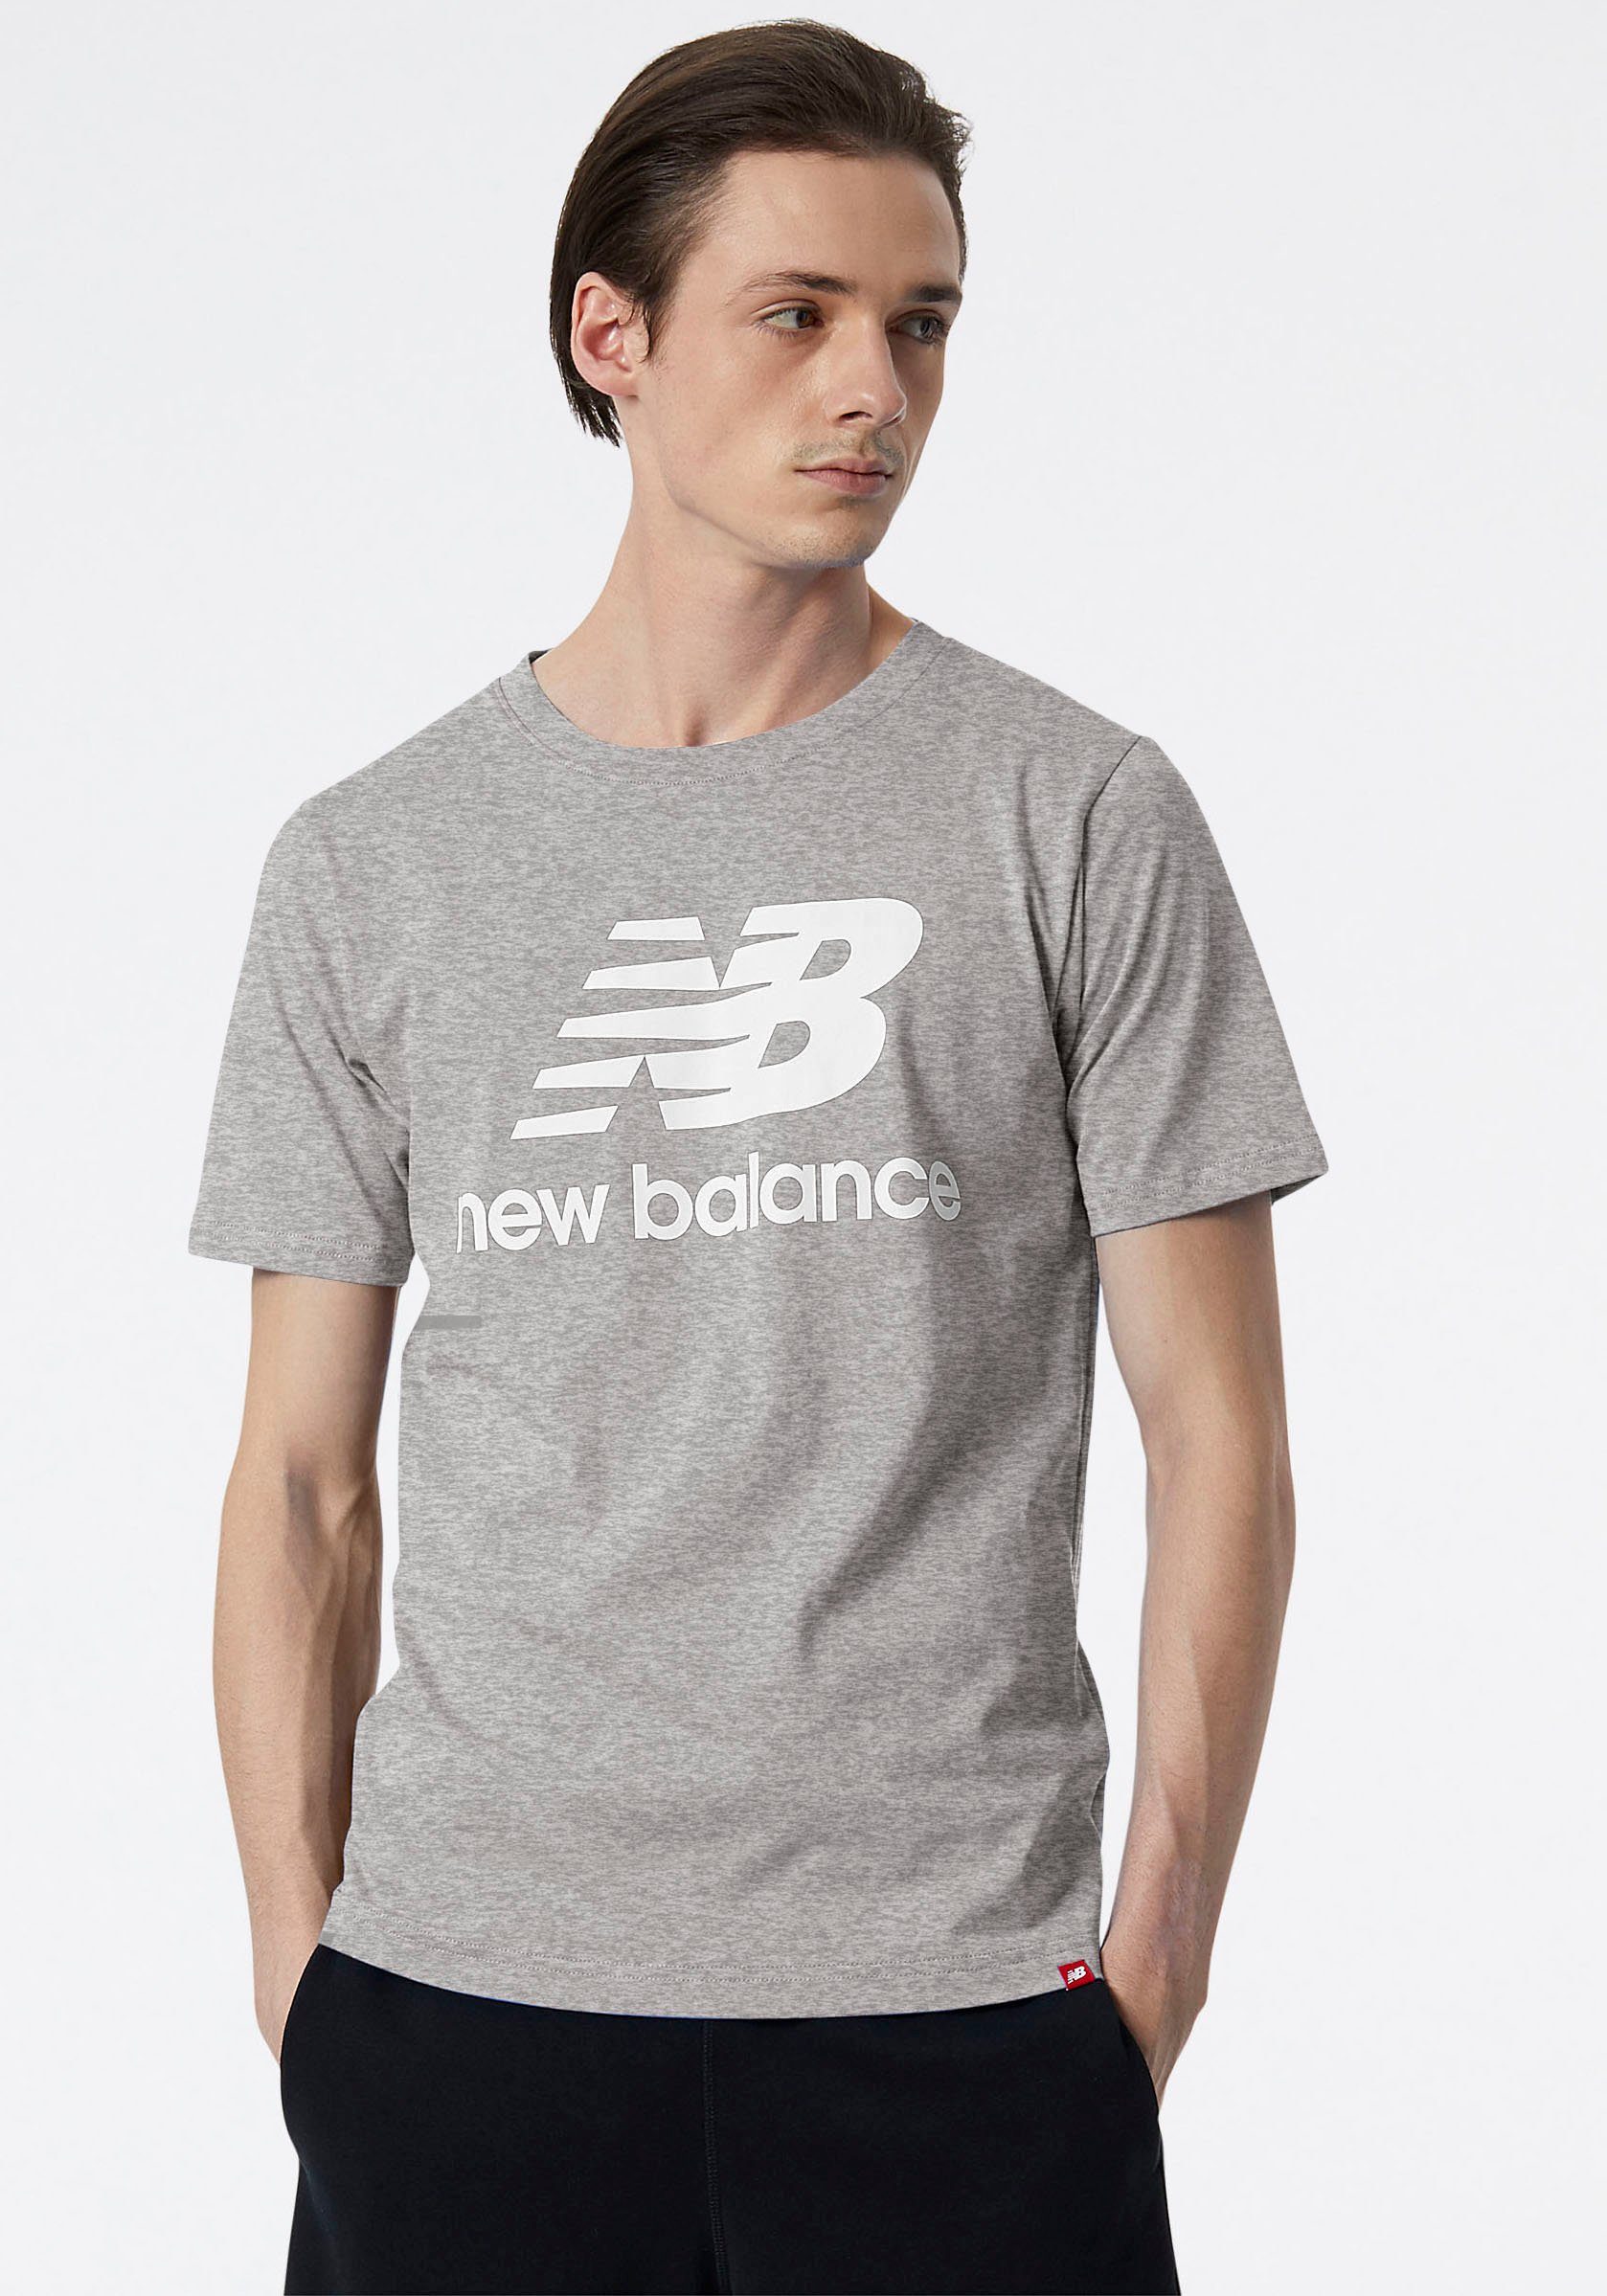 grau T-SHIRT NB T-Shirt Balance New STACKED LOGO ESSENTIALS